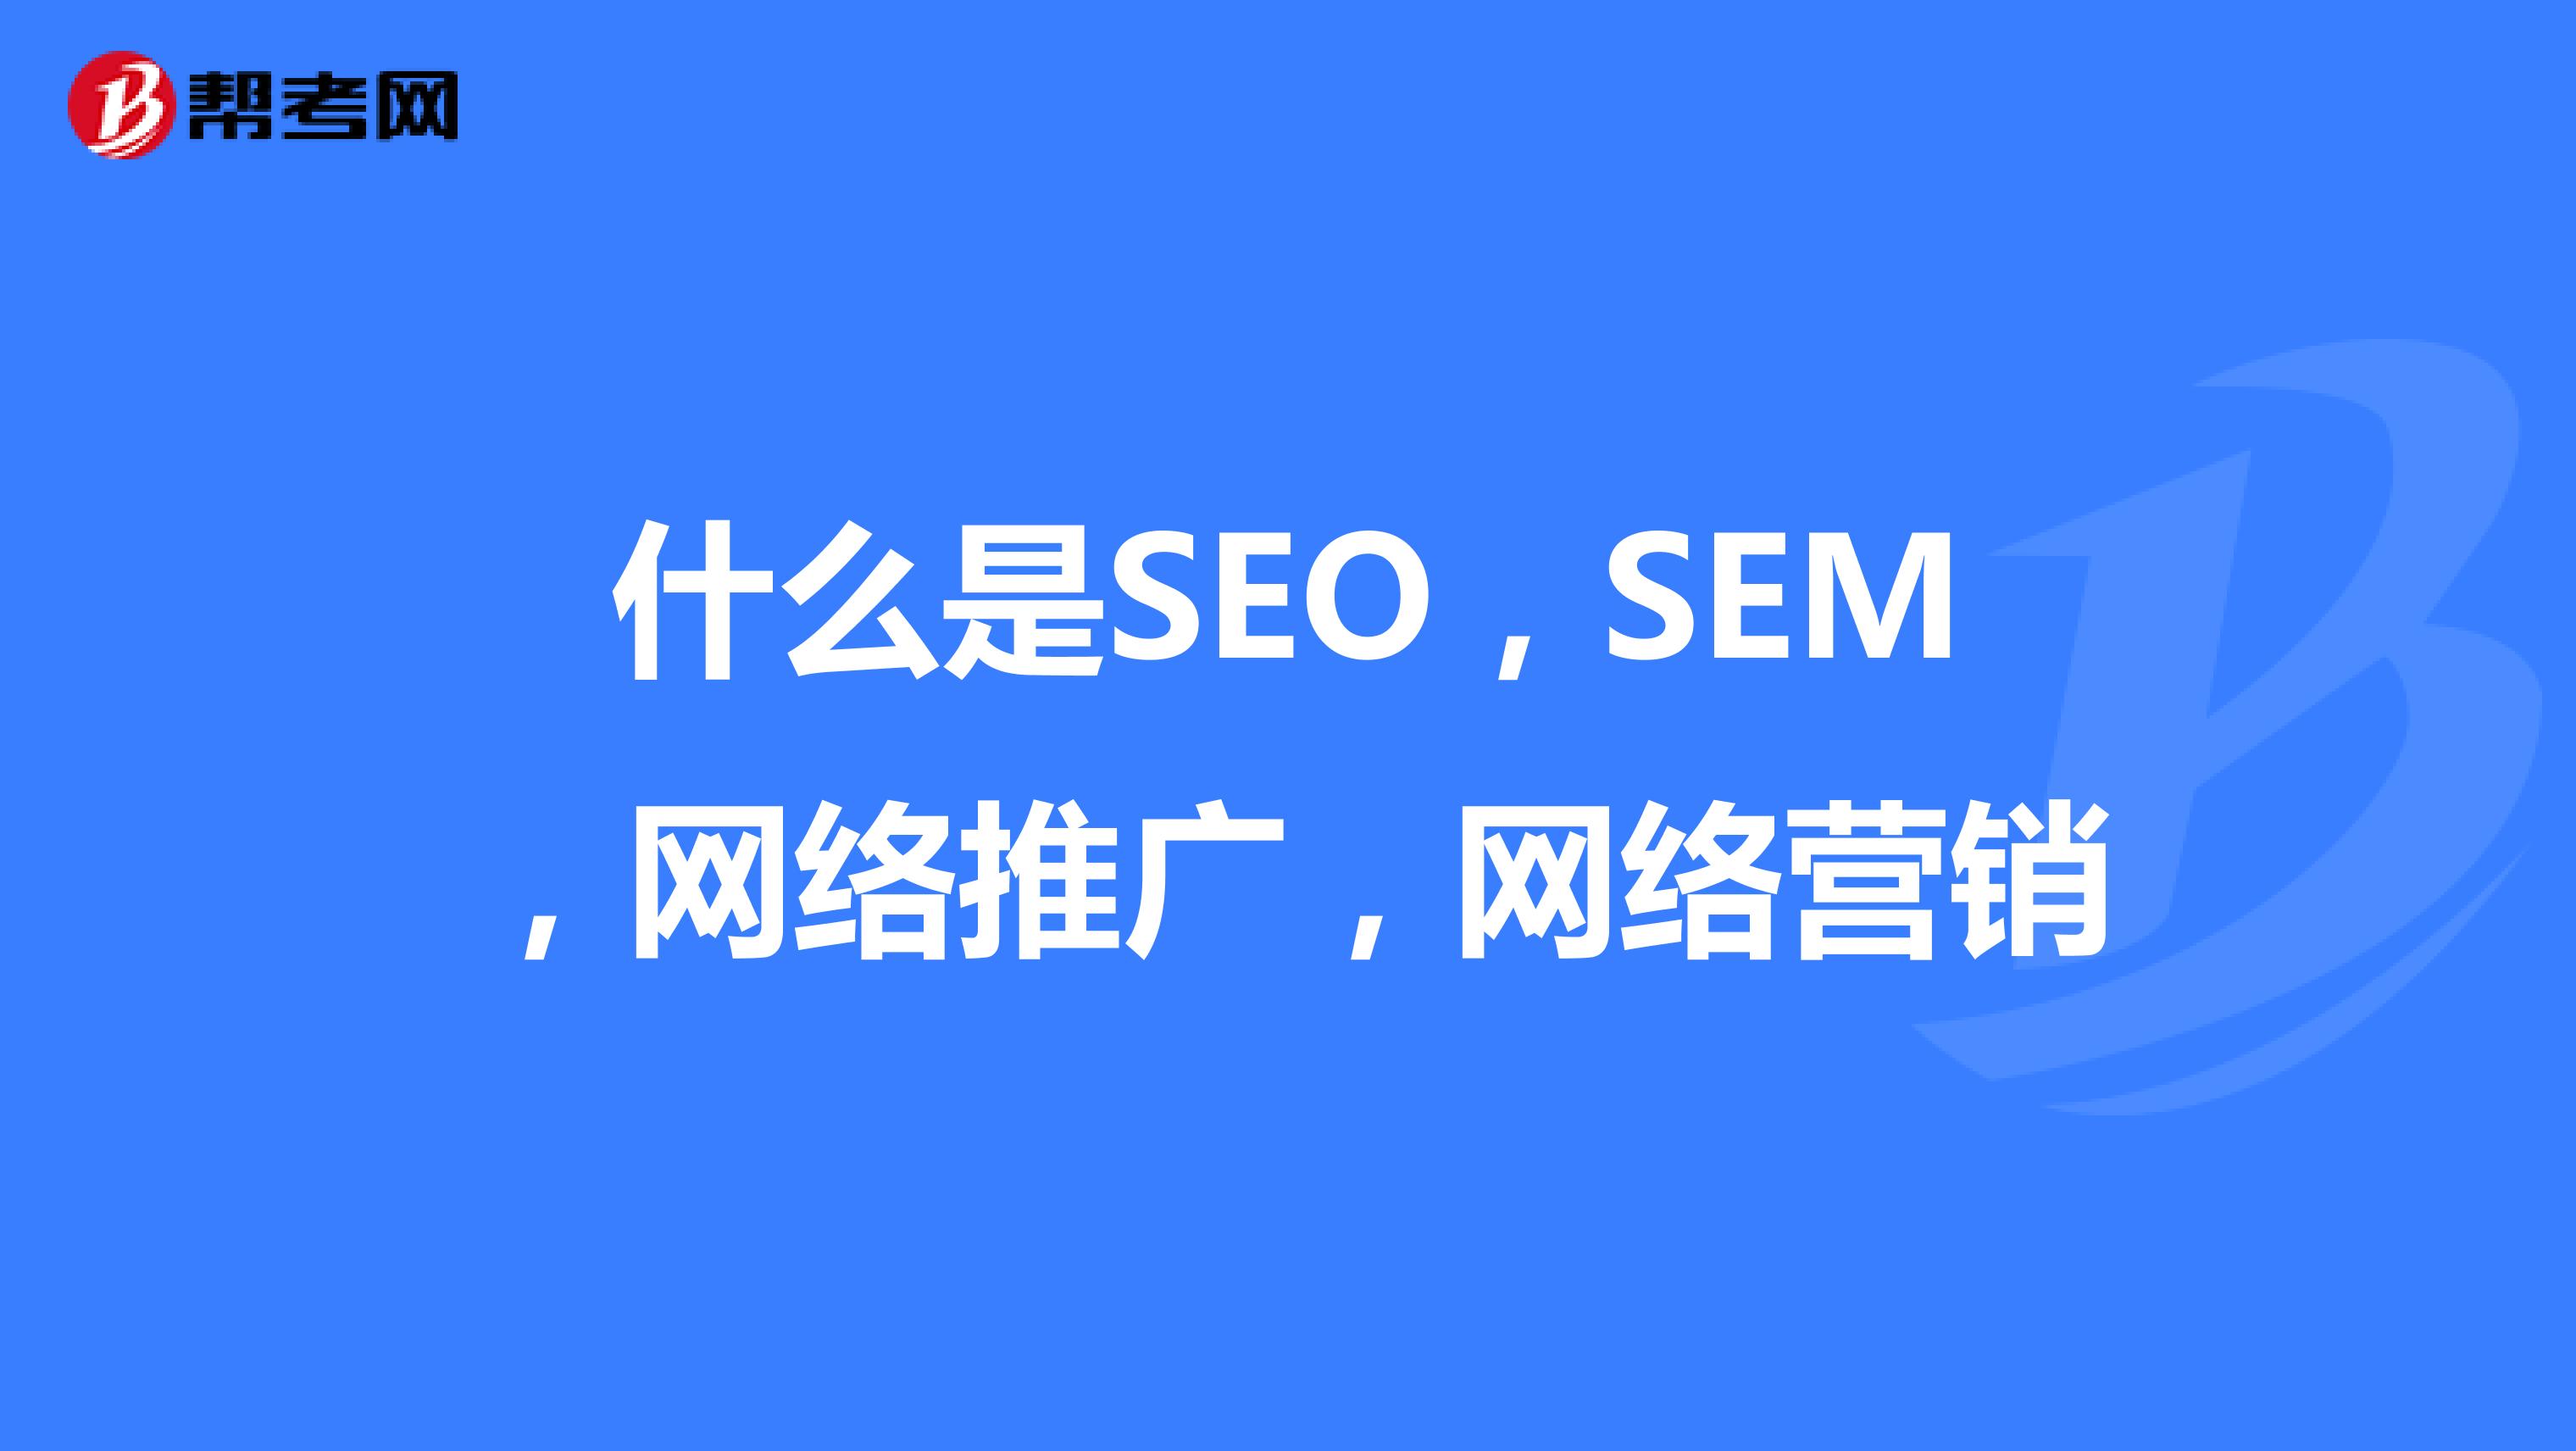 seo优化91获客湖北运营中心为您介绍【】品牌营销解决方案seo关键词优化外包　量子seo(图1)